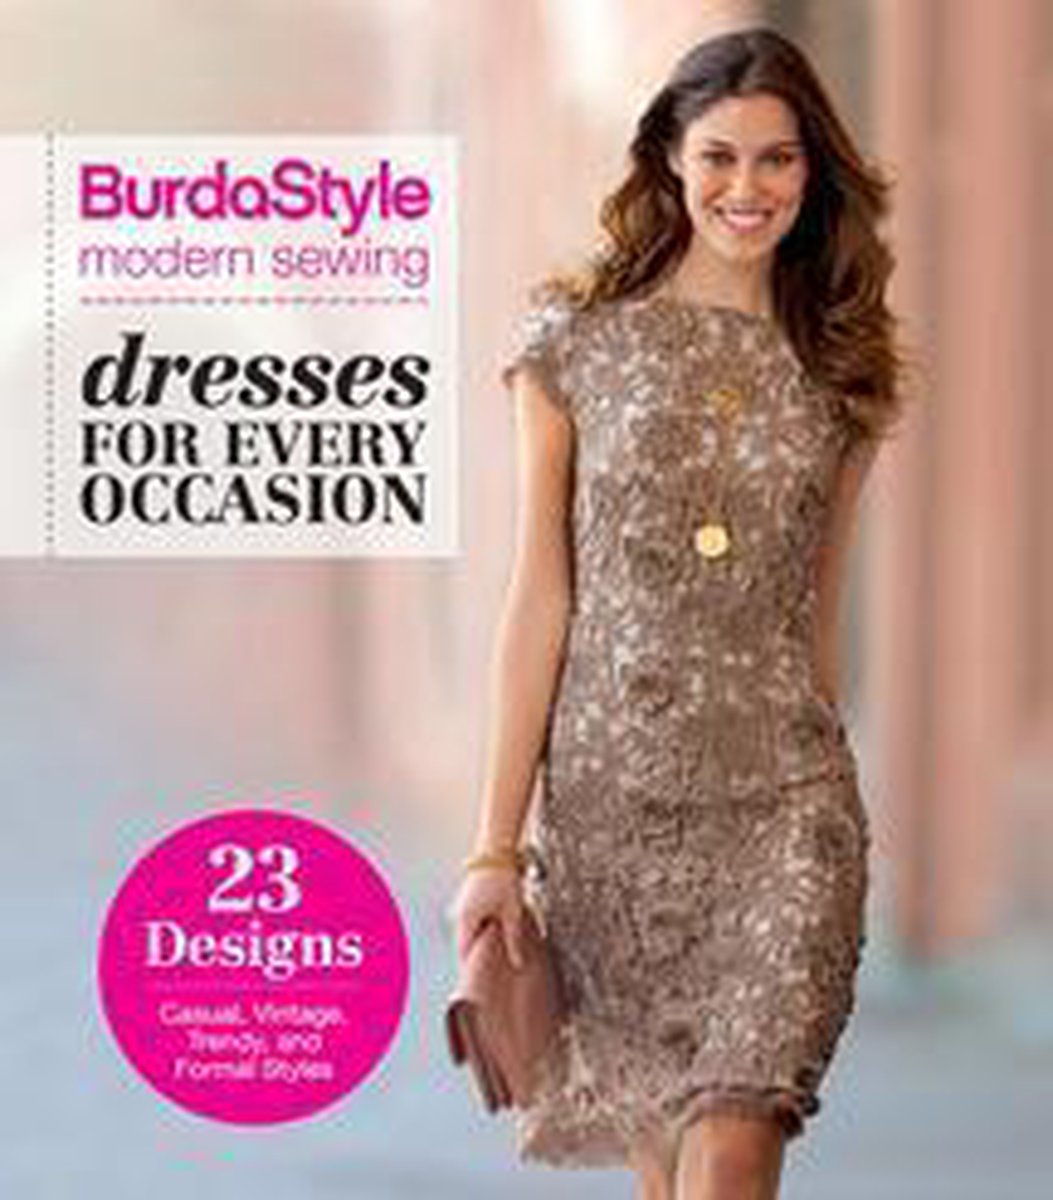 BurdaStyle Modern Sewing - Dresses For Every Occasion - Burdastyle Magazine